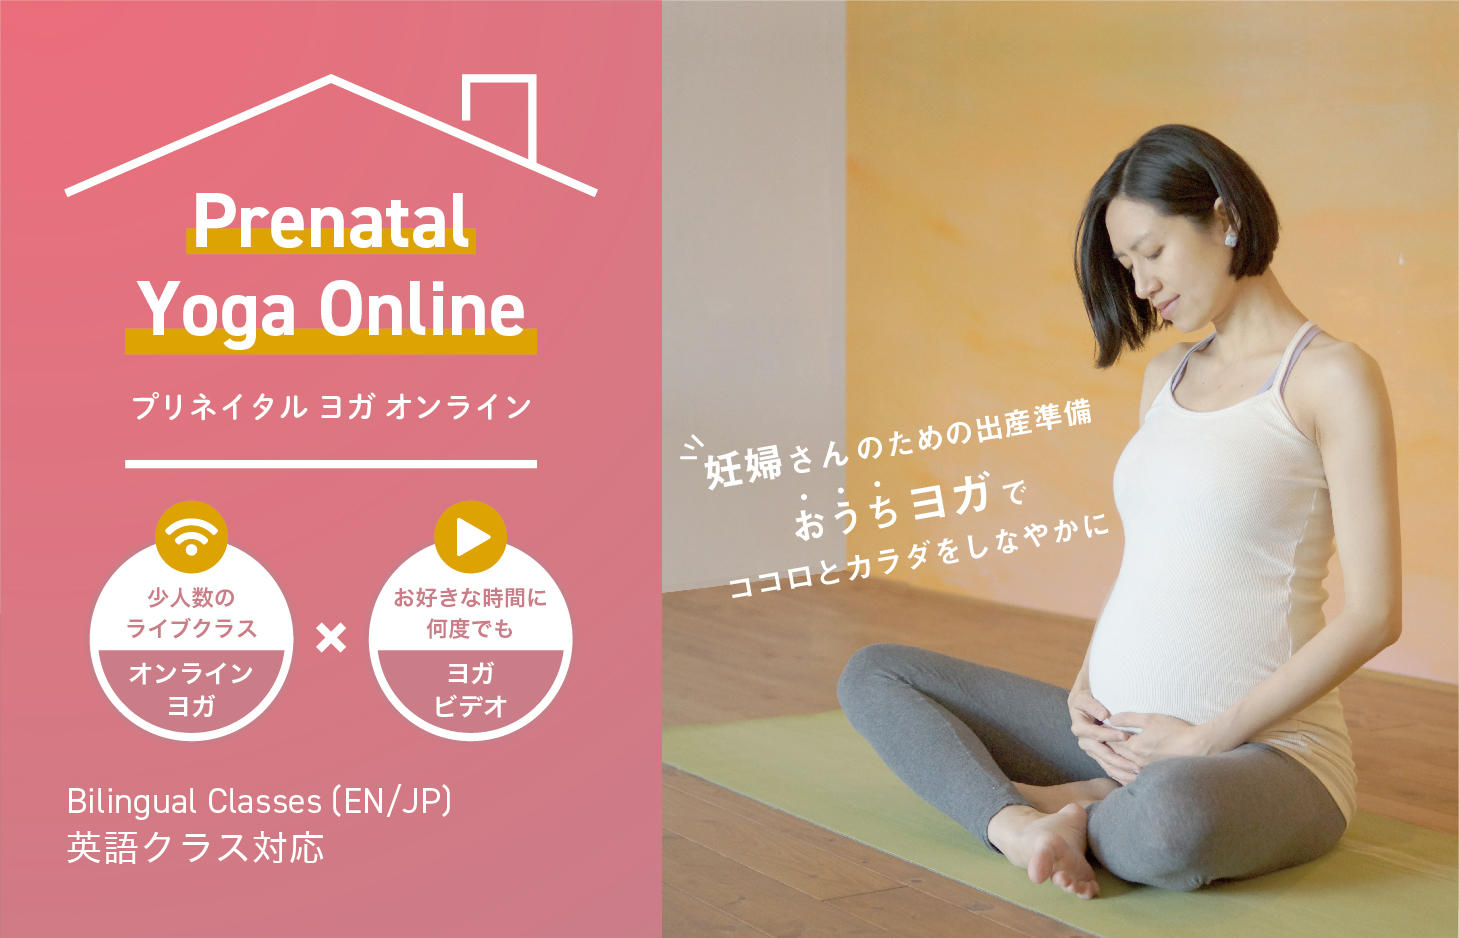 2105_prenatal yoga online_mobile.jpg